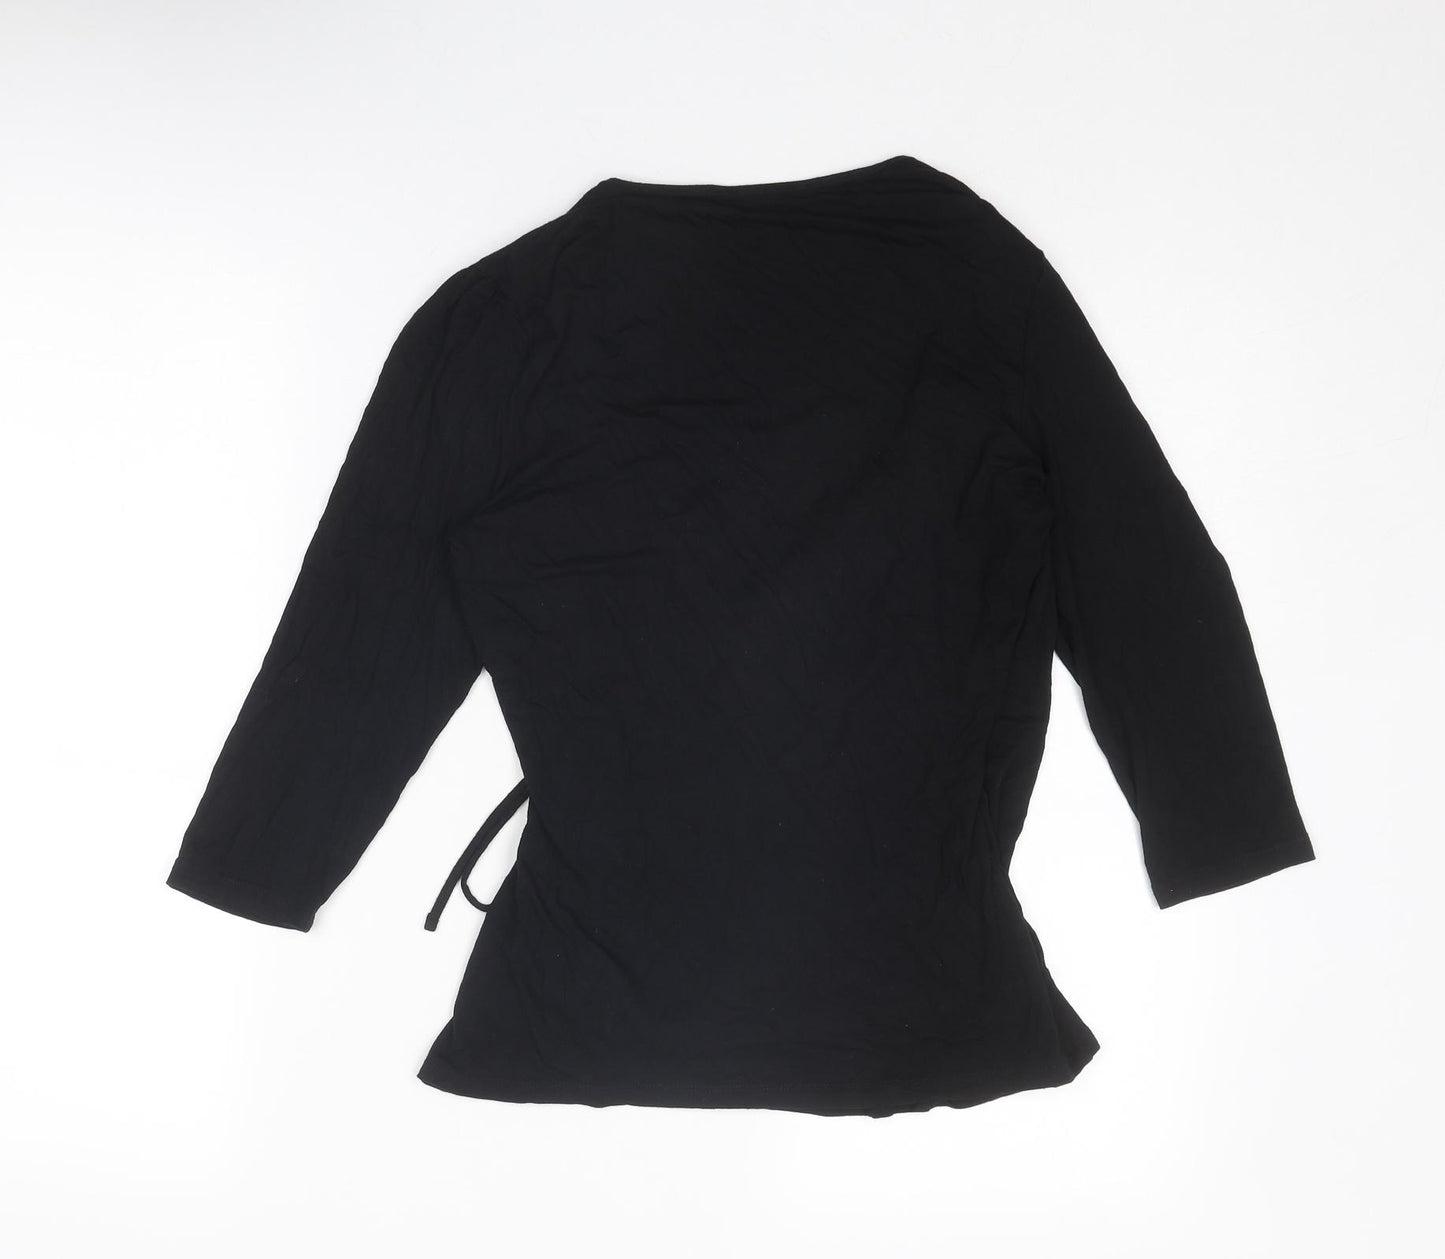 Marks and Spencer Womens Black Viscose Wrap Blouse Size 12 V-Neck